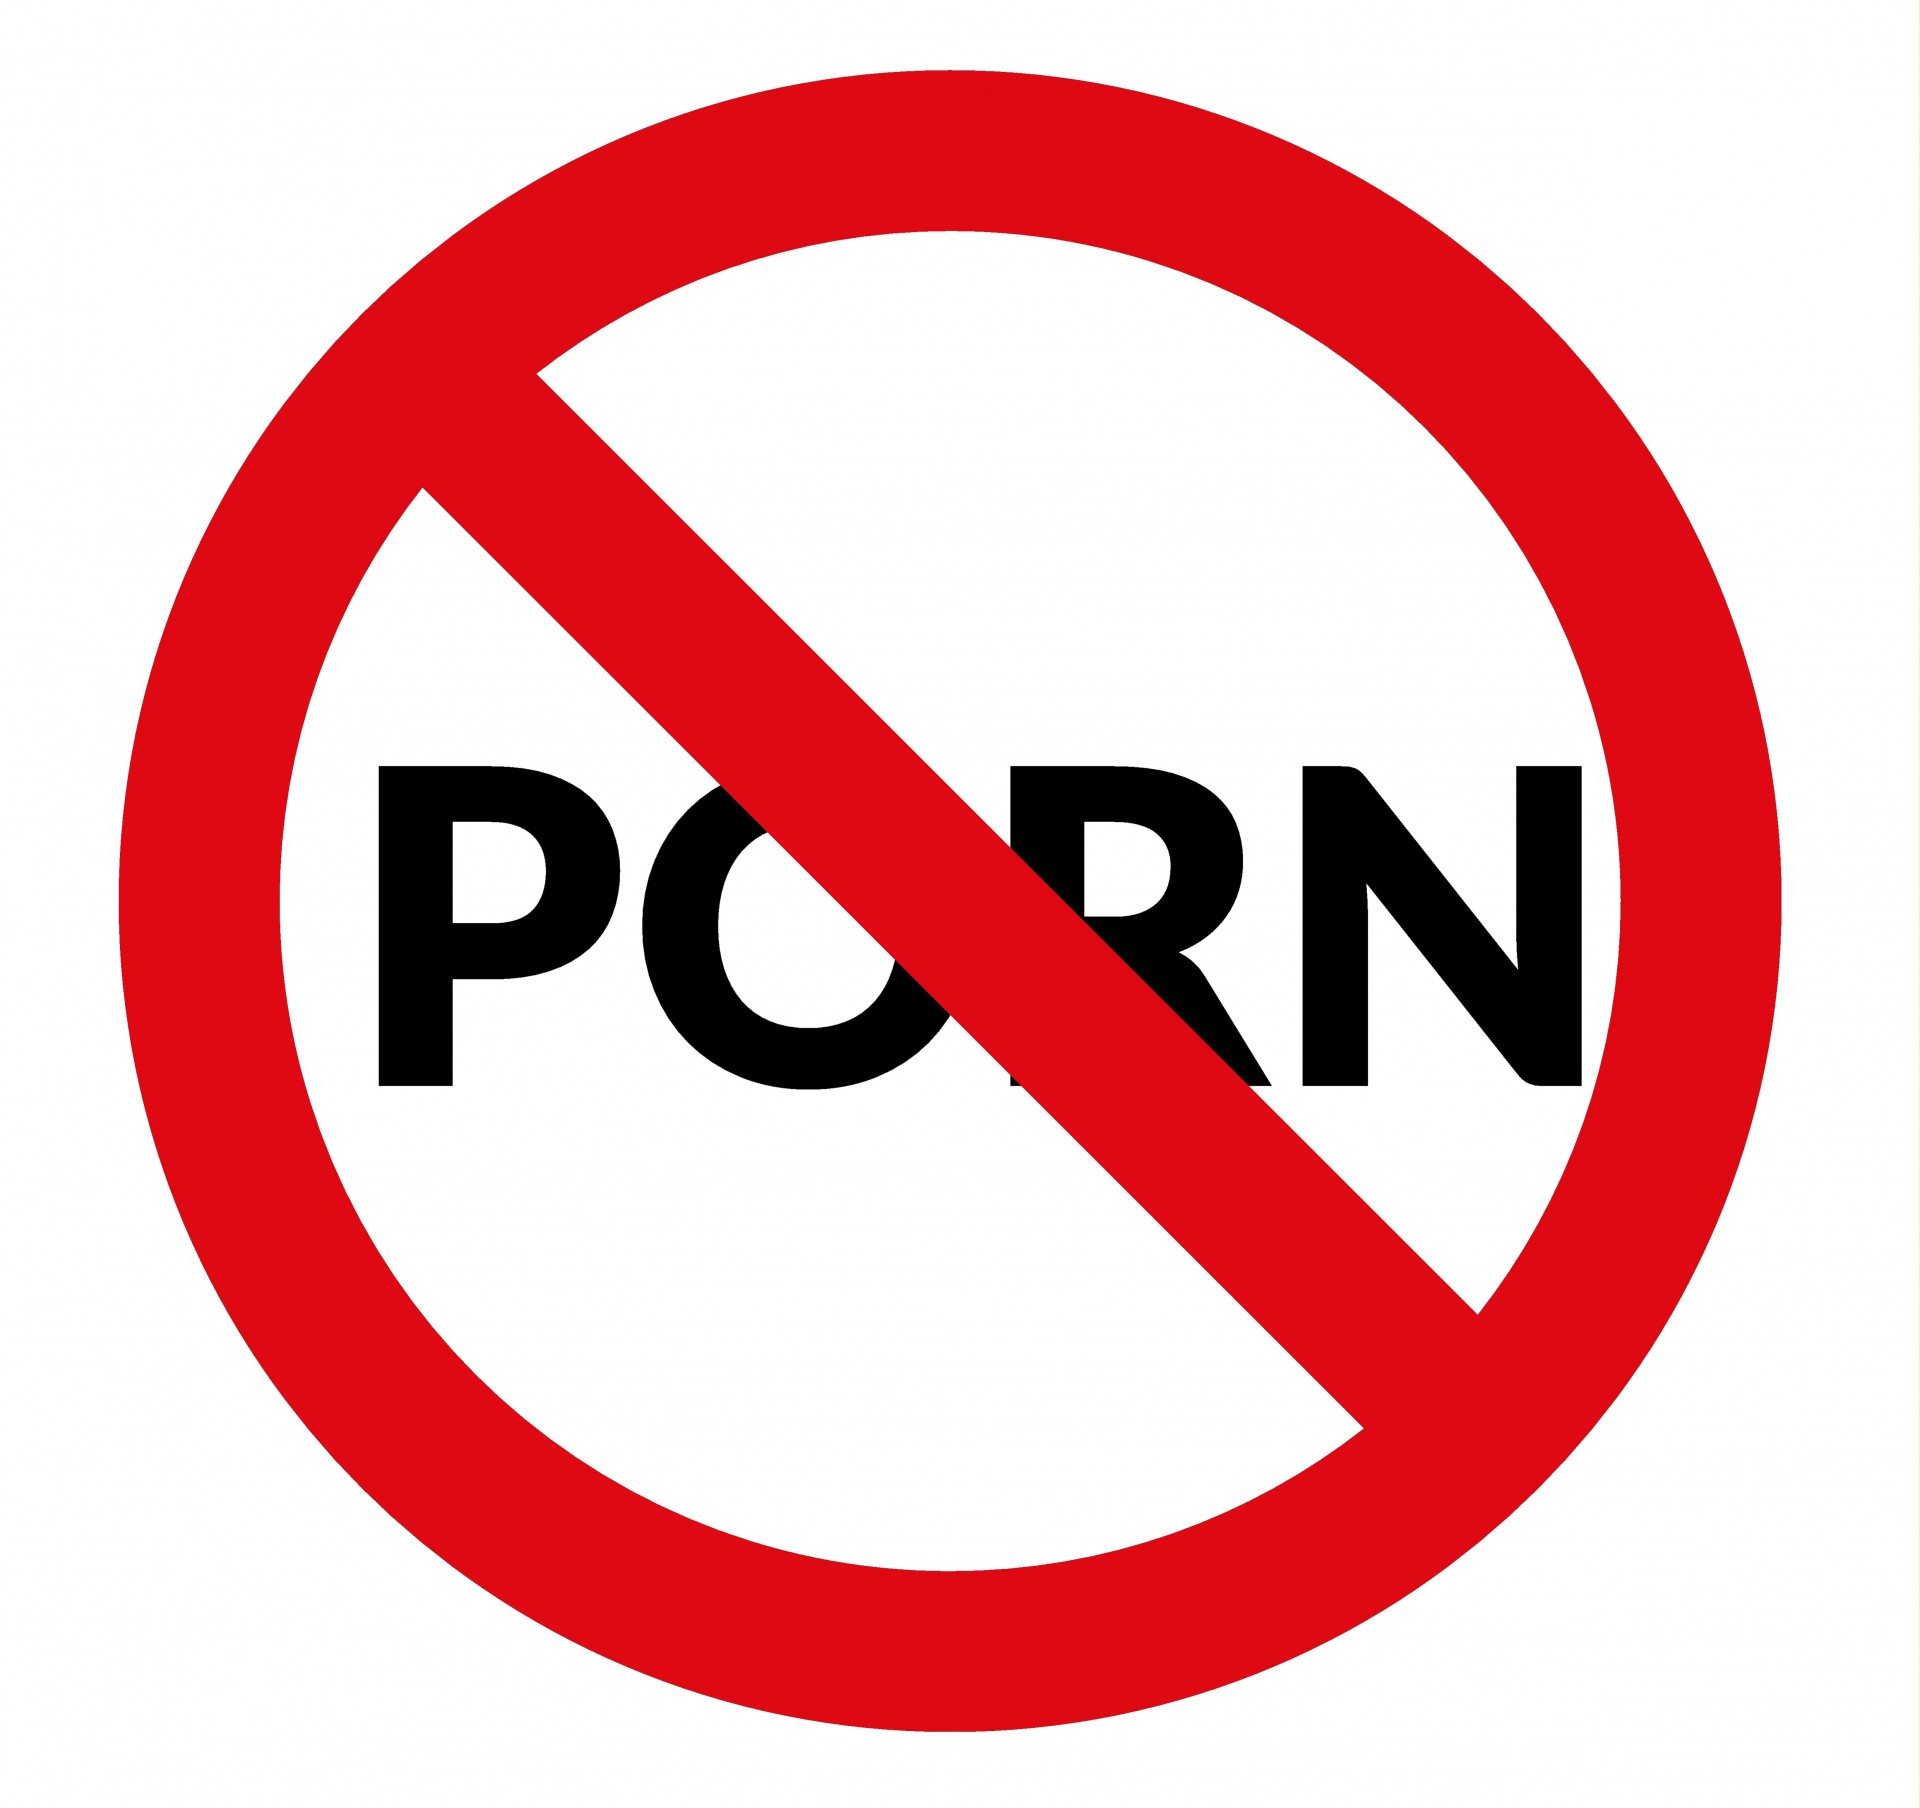 Xxx Dot C O M - Porn,xxx,warning,sign,red - free image from needpix.com